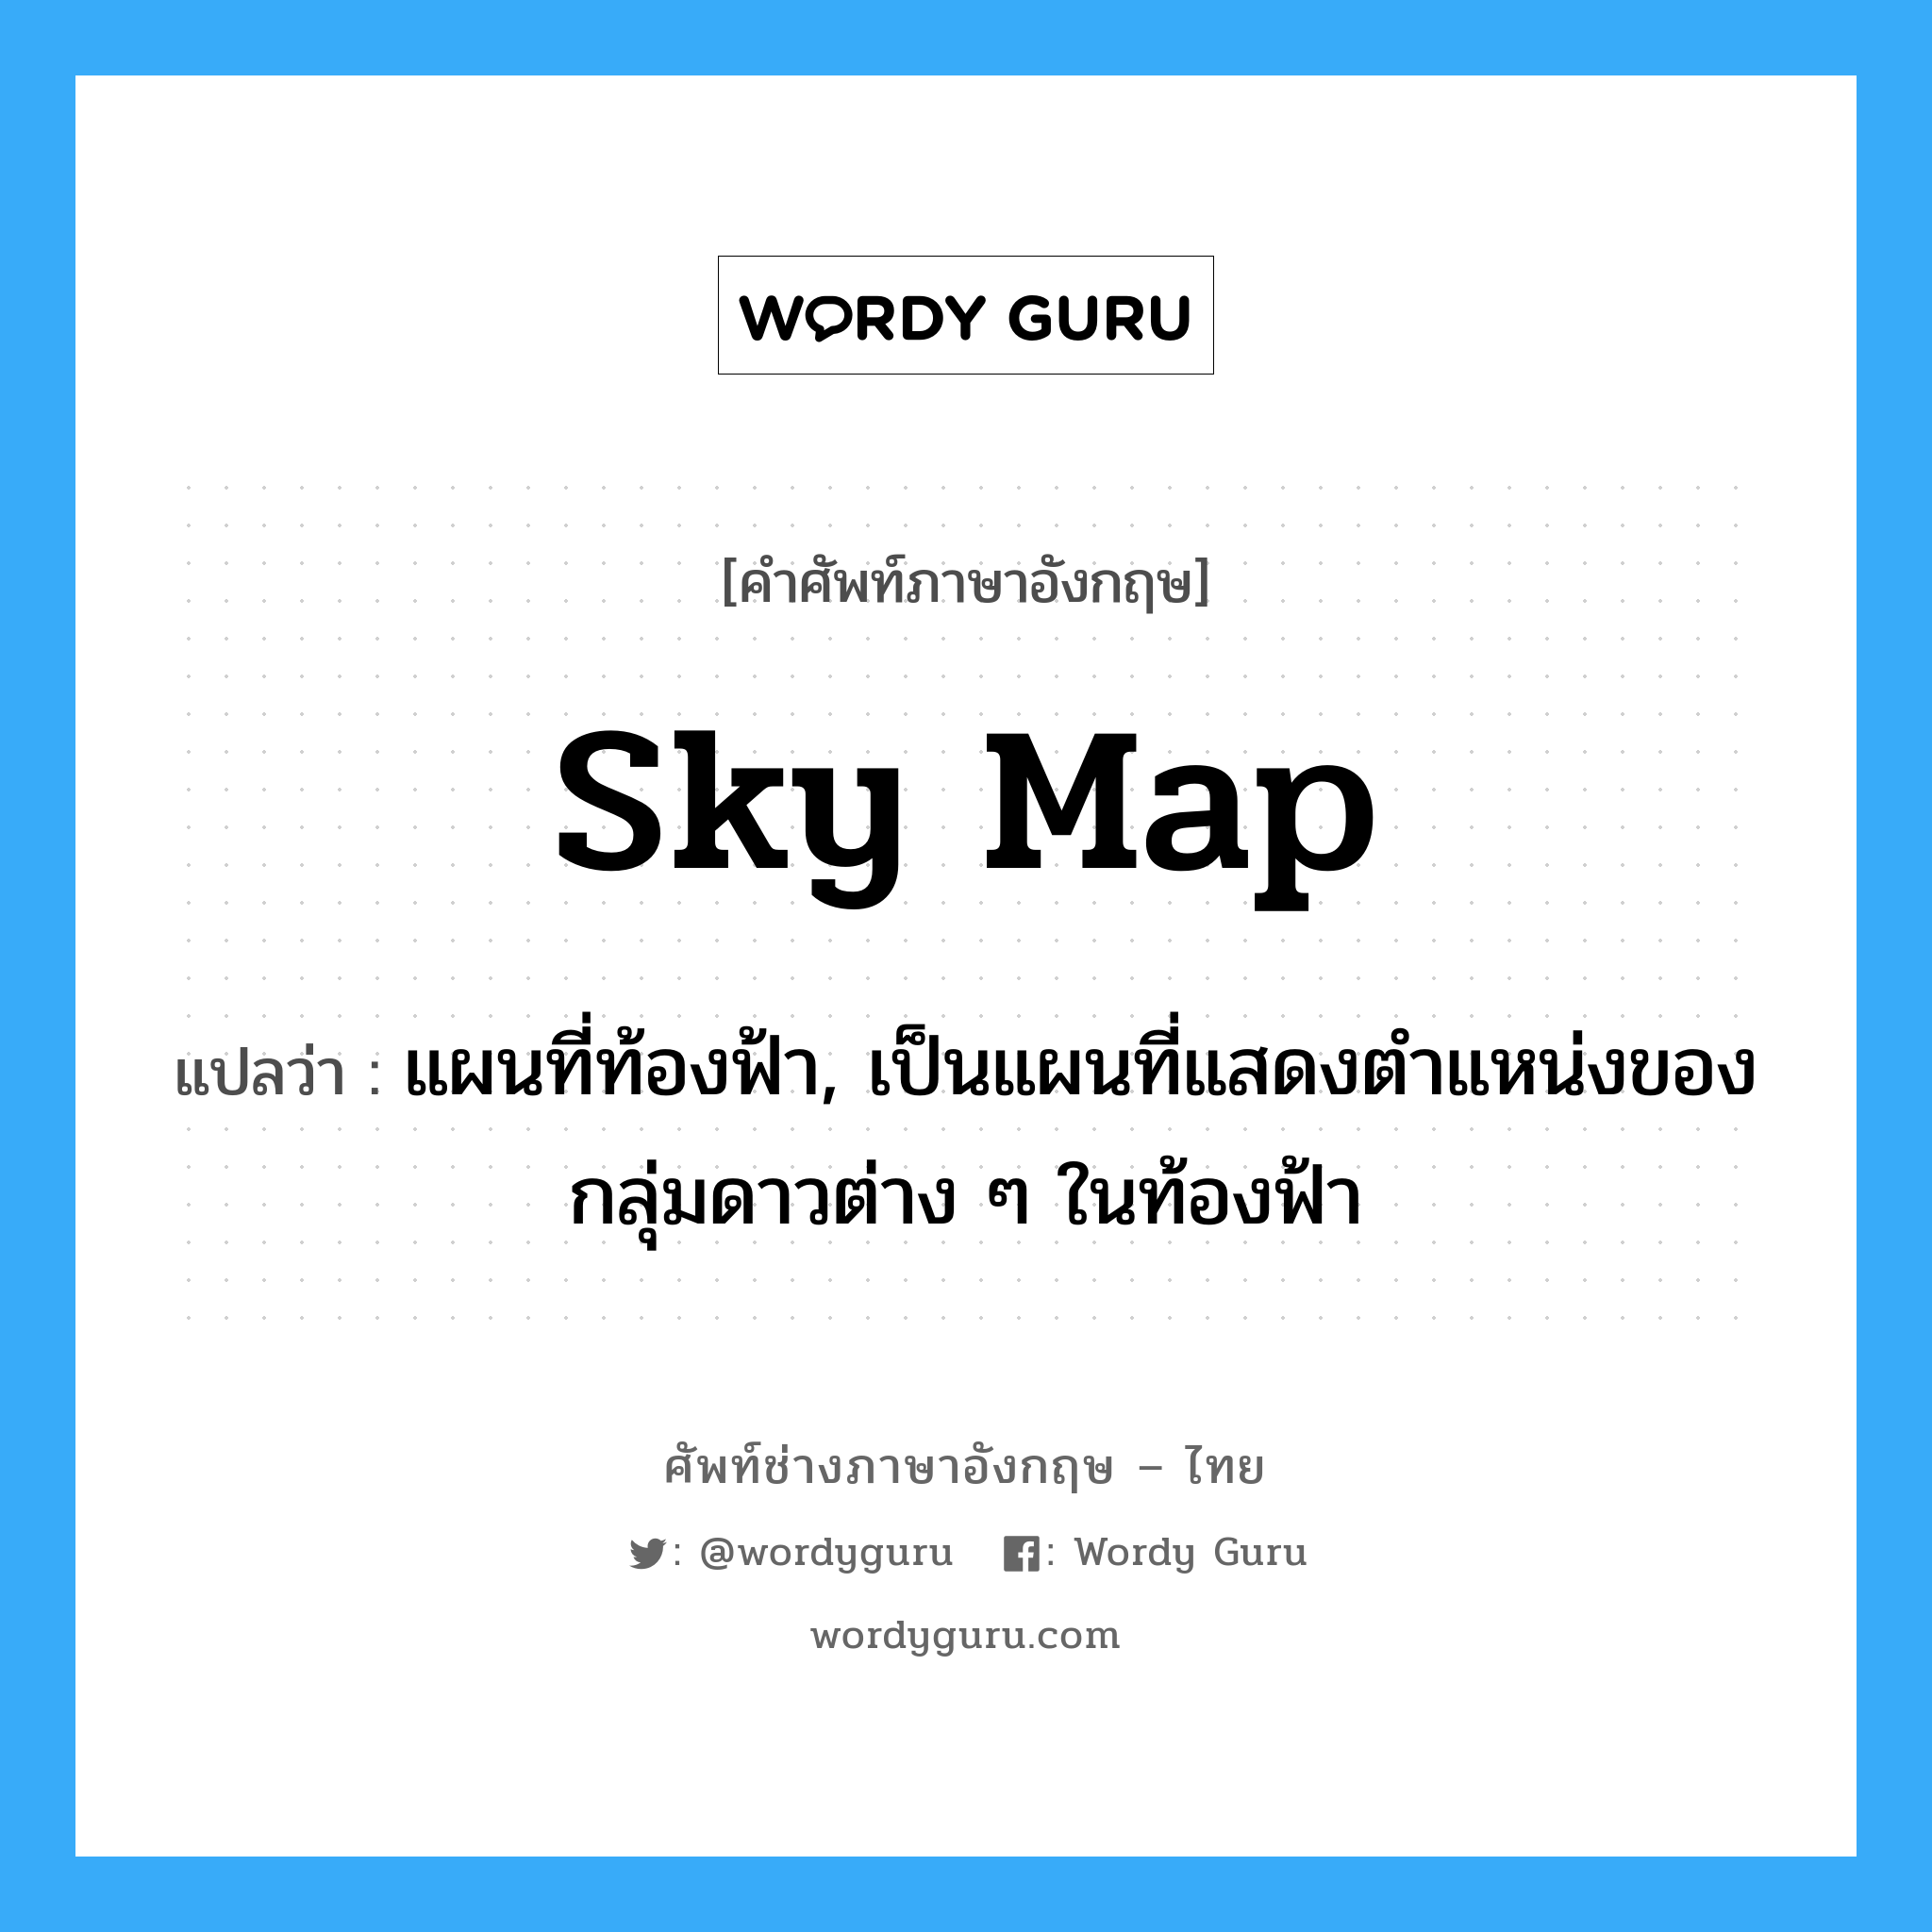 sky map แปลว่า?, คำศัพท์ช่างภาษาอังกฤษ - ไทย sky map คำศัพท์ภาษาอังกฤษ sky map แปลว่า แผนที่ท้องฟ้า, เป็นแผนที่แสดงตำแหน่งของกลุ่มดาวต่าง ๆ ในท้องฟ้า